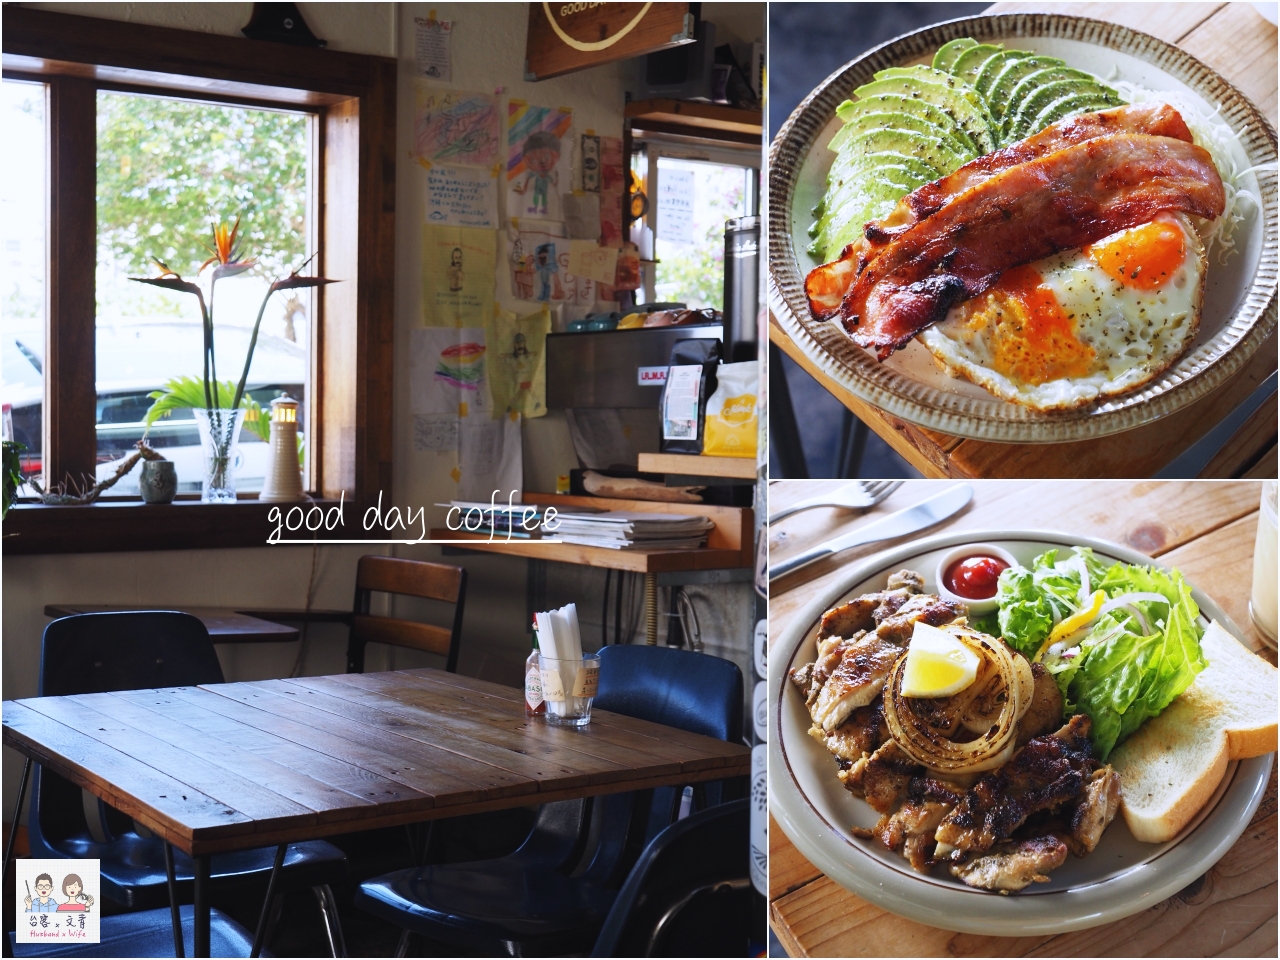 【沖繩⋈美食】坐擁山林海景的「カフェ こくう」 享用新鮮自然的野菜料理 @台客X文青的夫婦日常